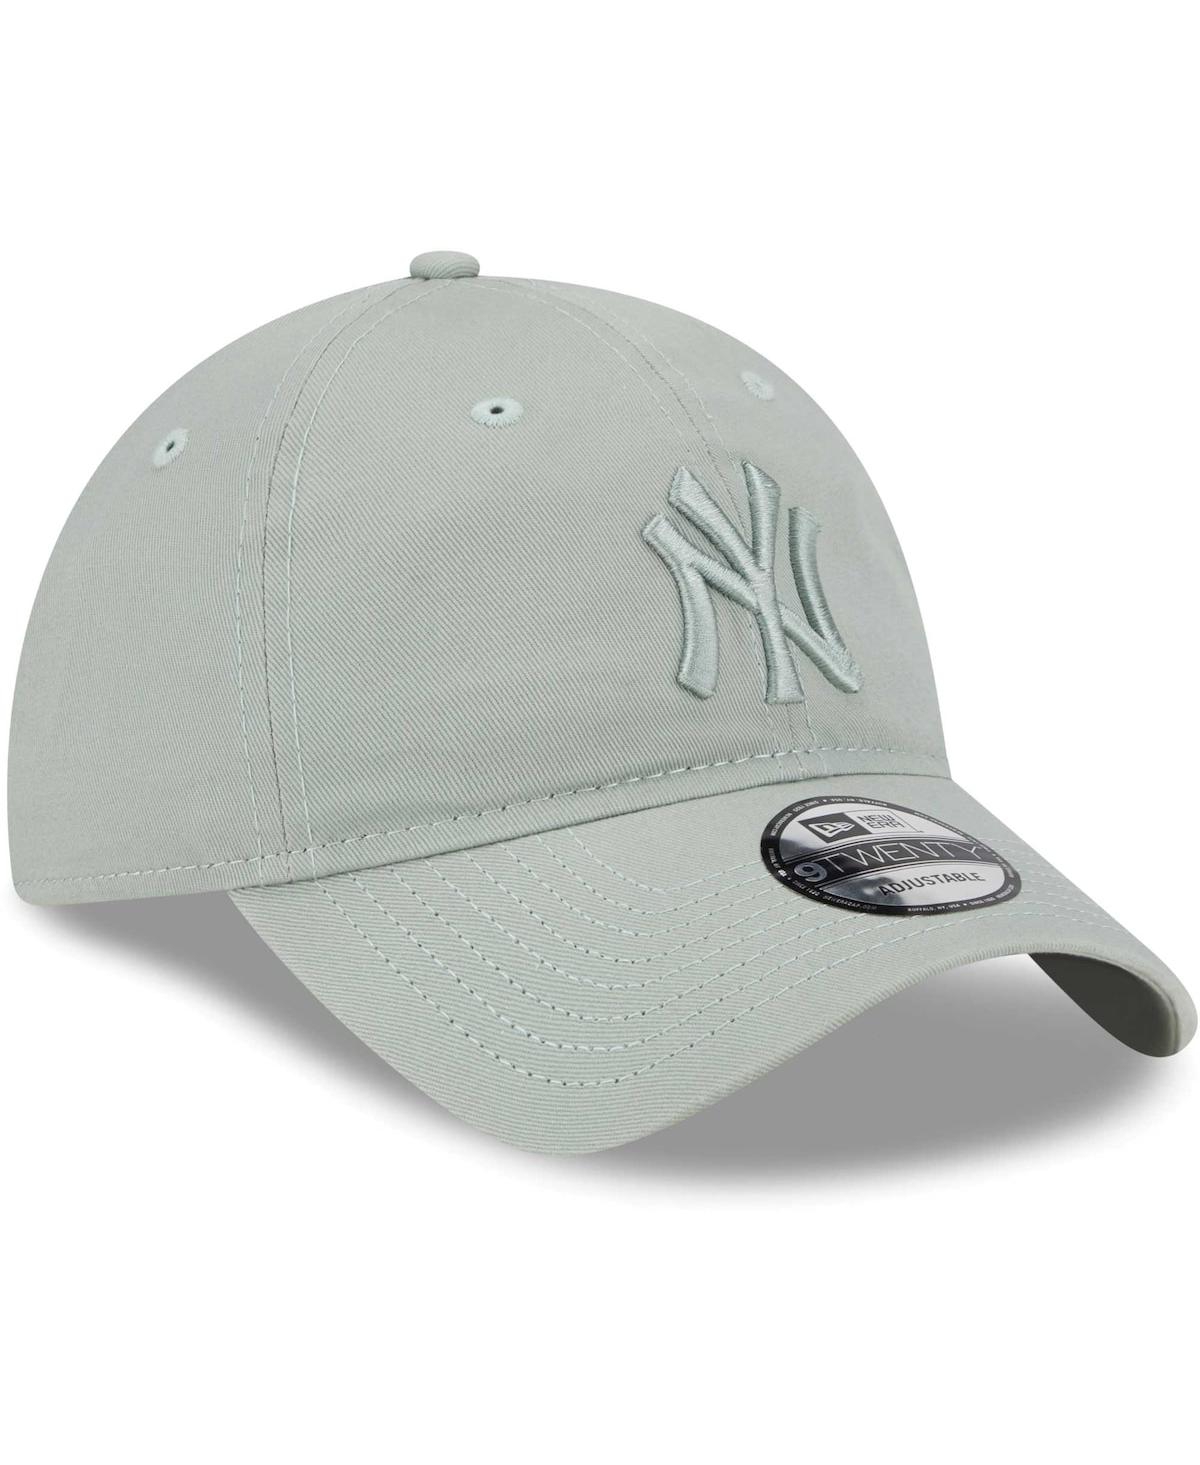 New York Yankees New Era Women's Shoutout 9TWENTY Adjustable Hat